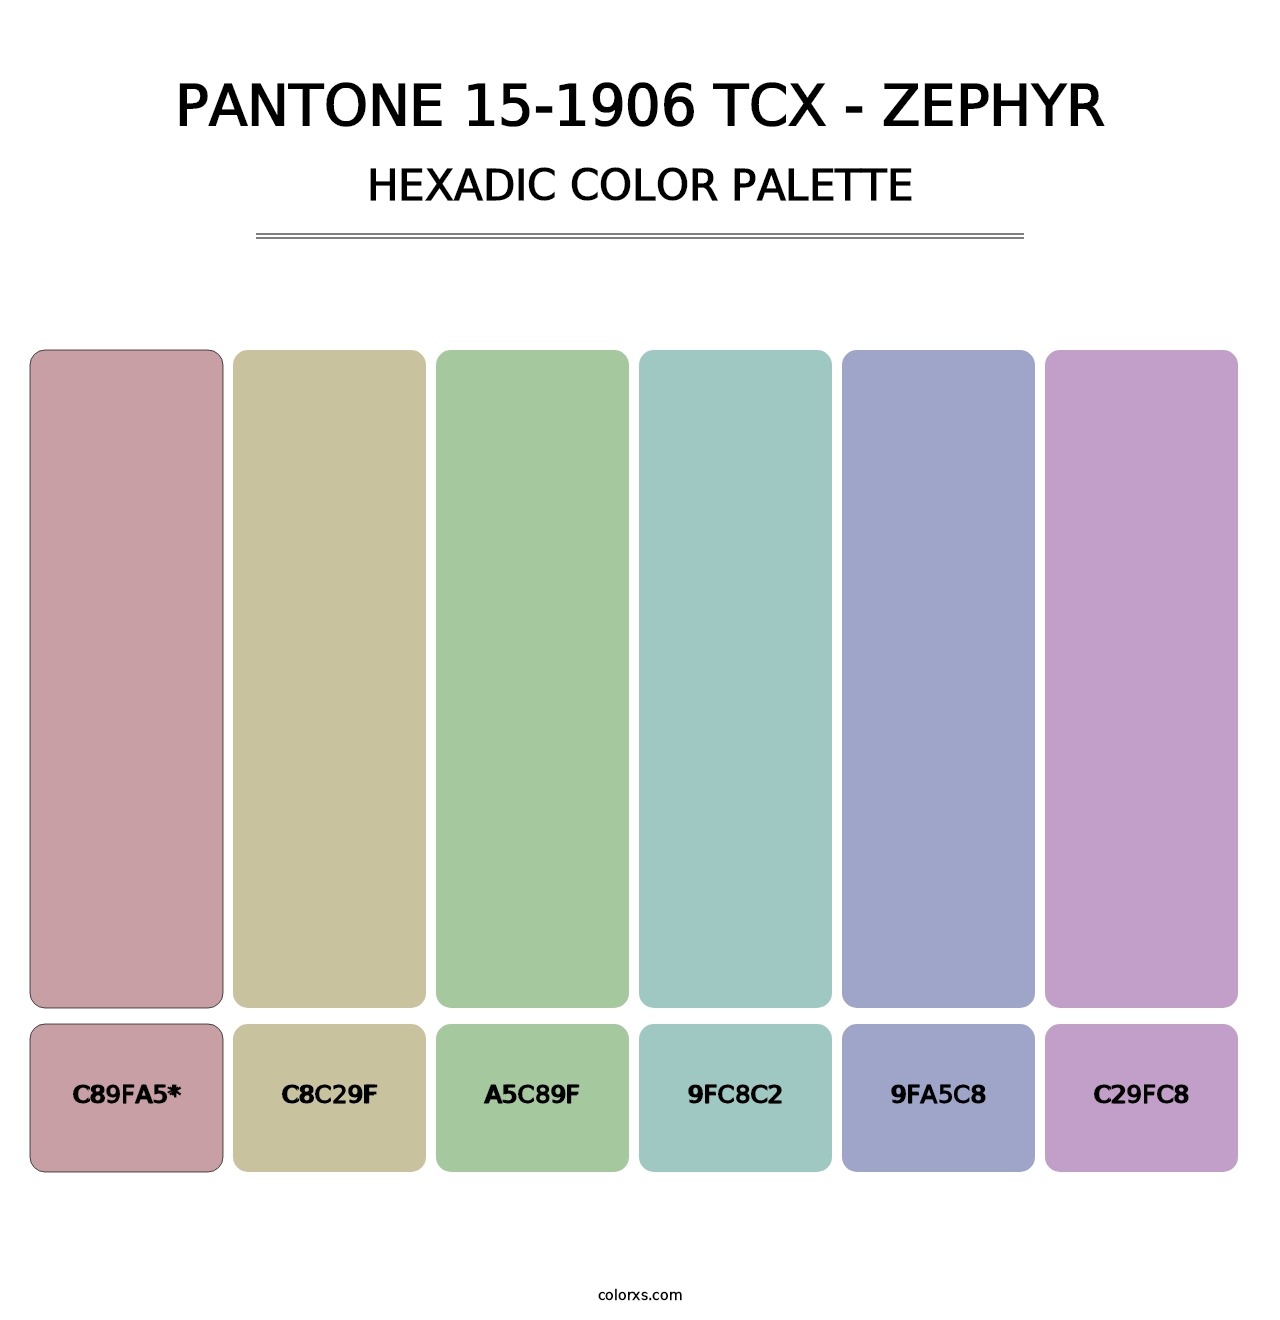 PANTONE 15-1906 TCX - Zephyr - Hexadic Color Palette